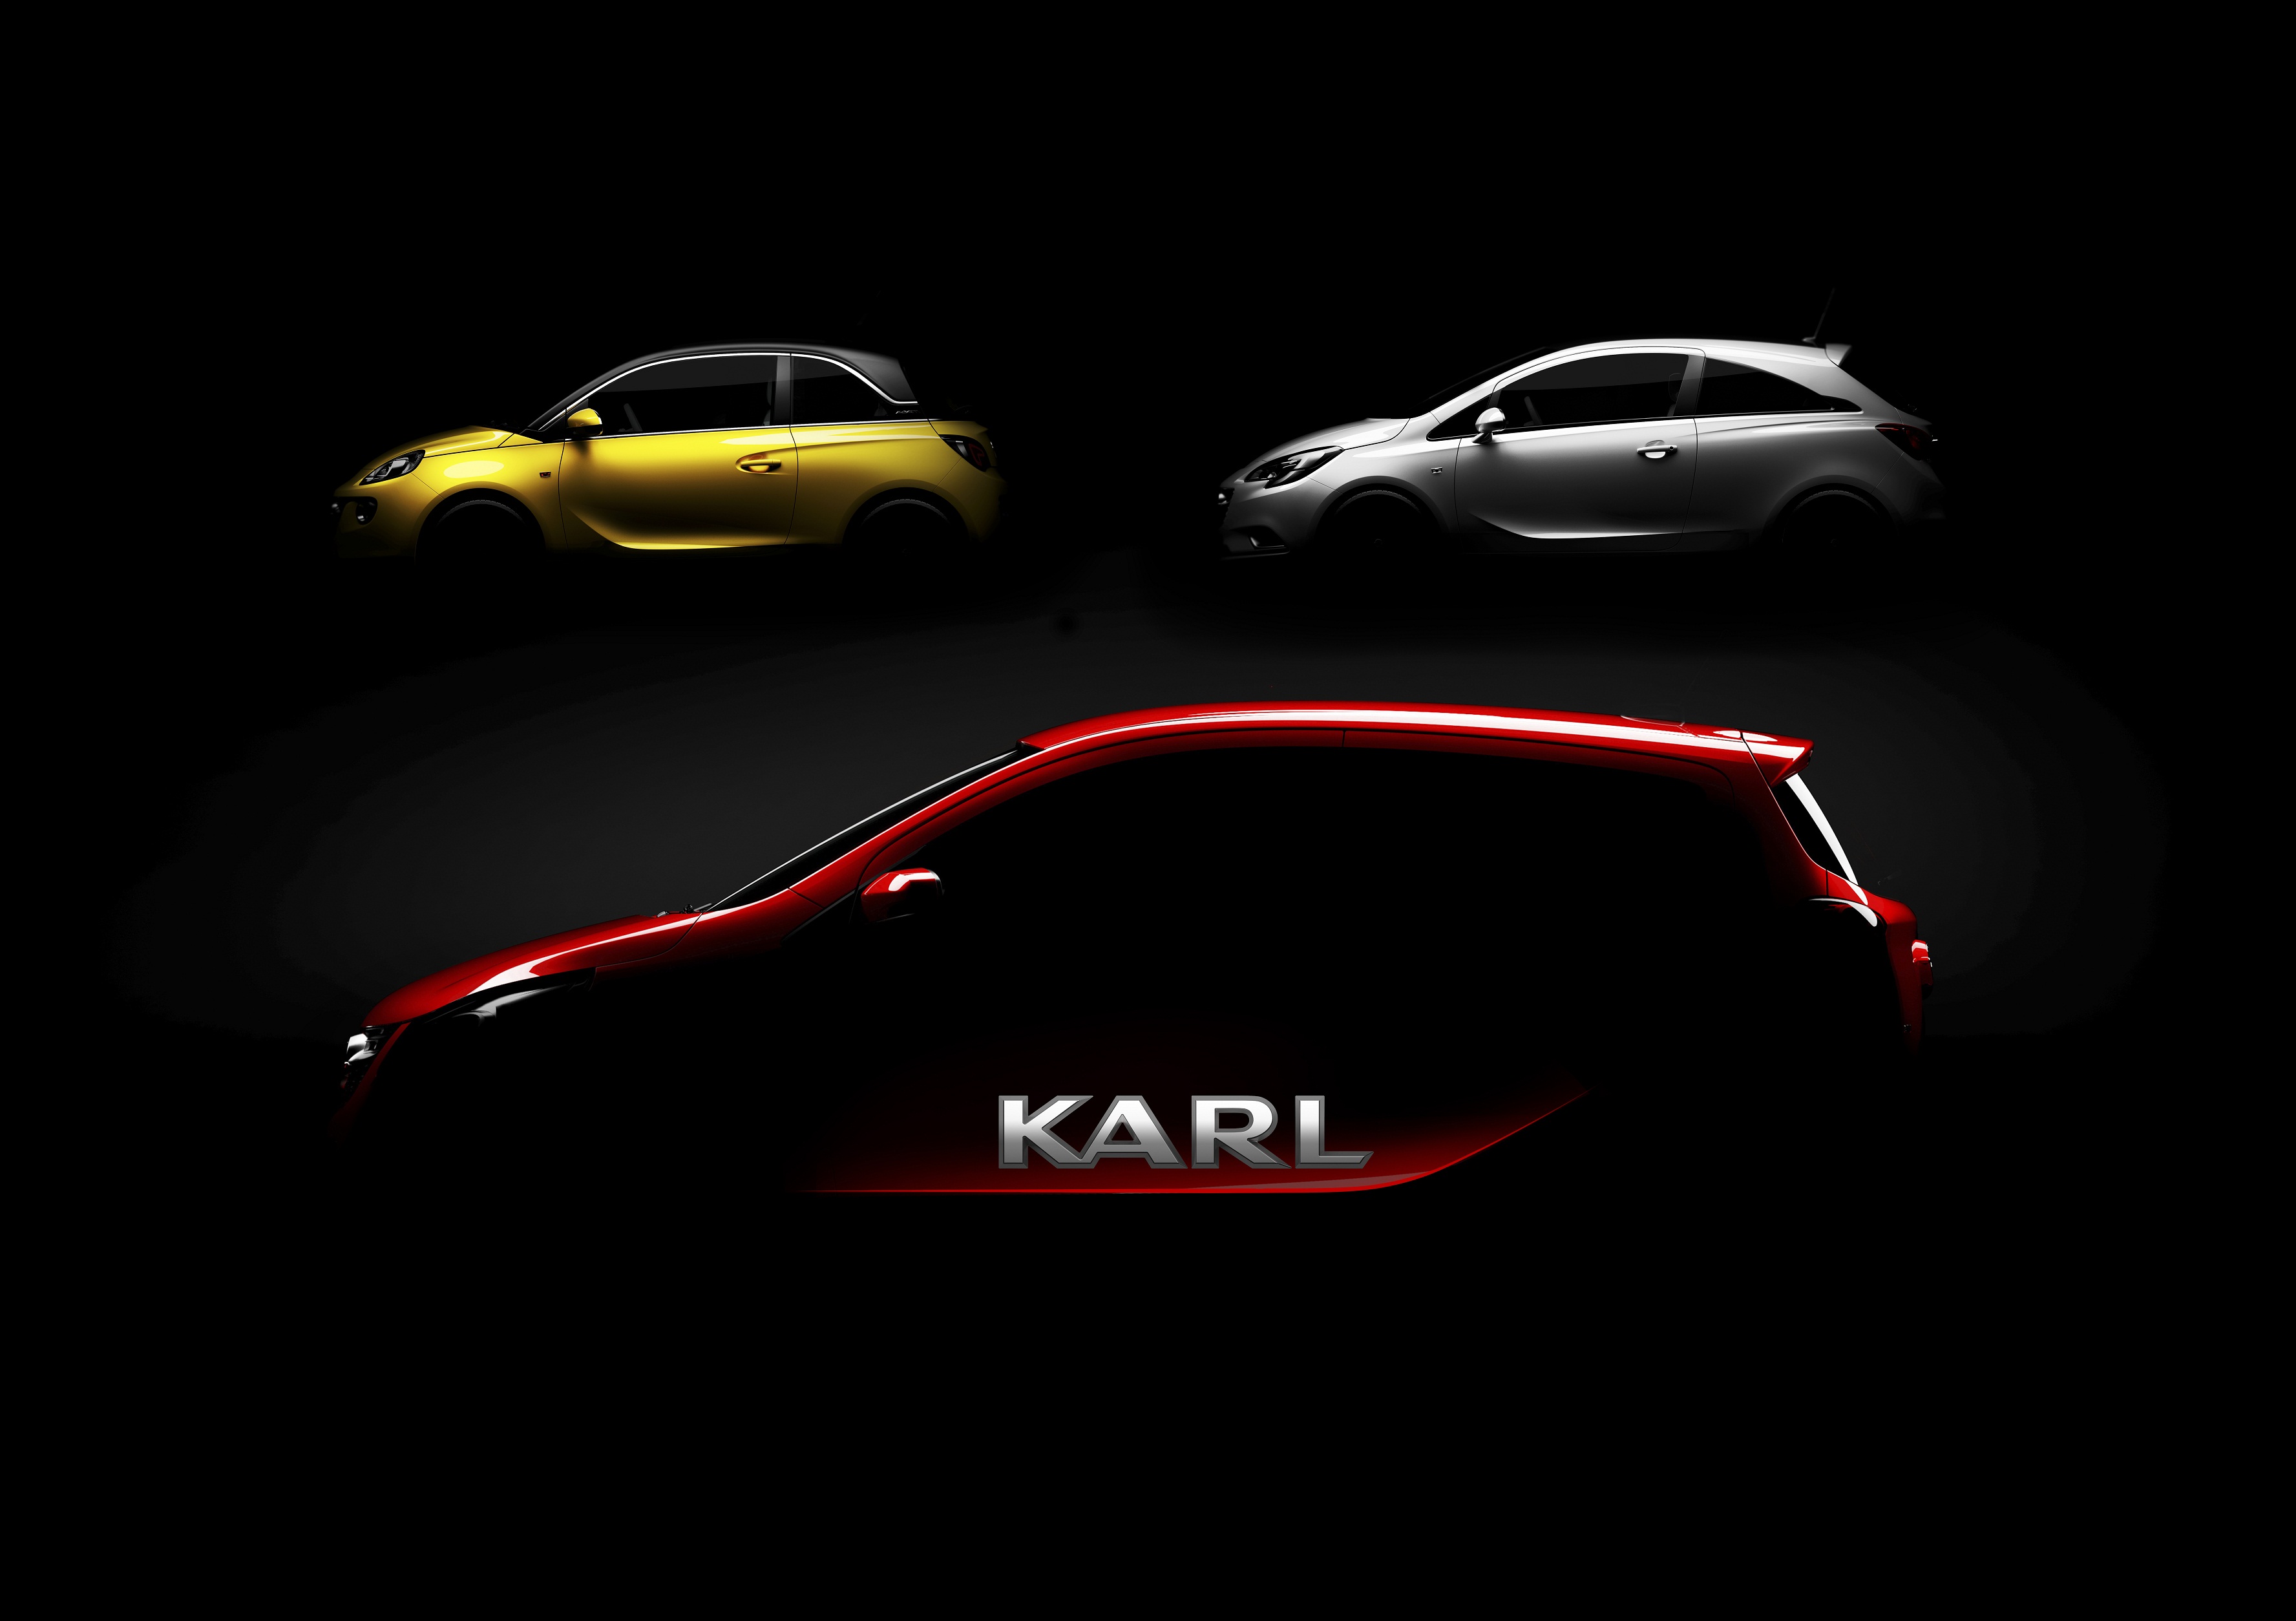 Mali automobil velikog imena: Opel predstavlja model Karl